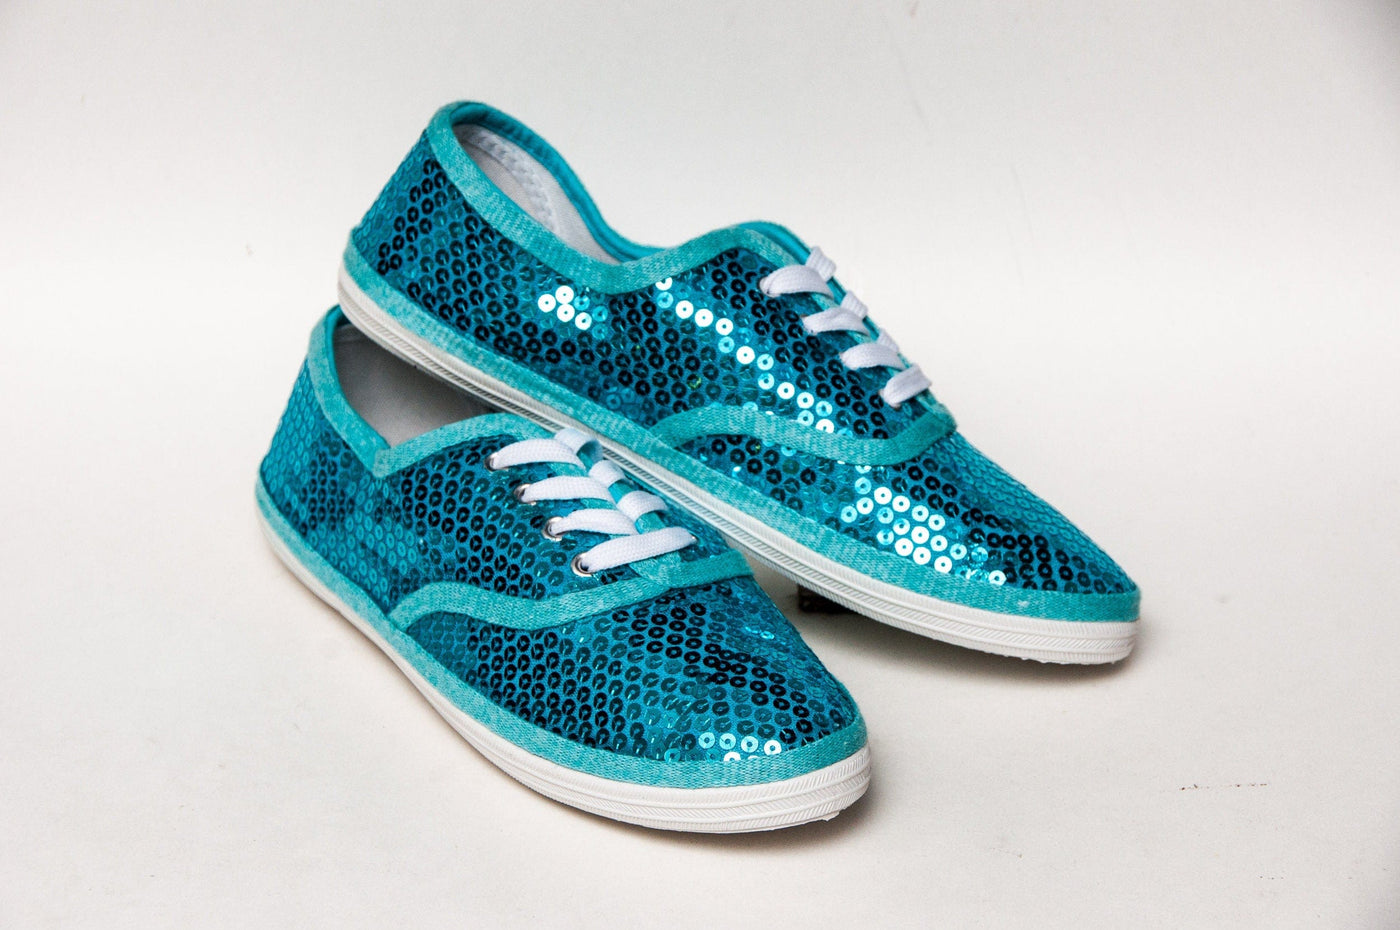 Malibu Blue Sequin Sneakers